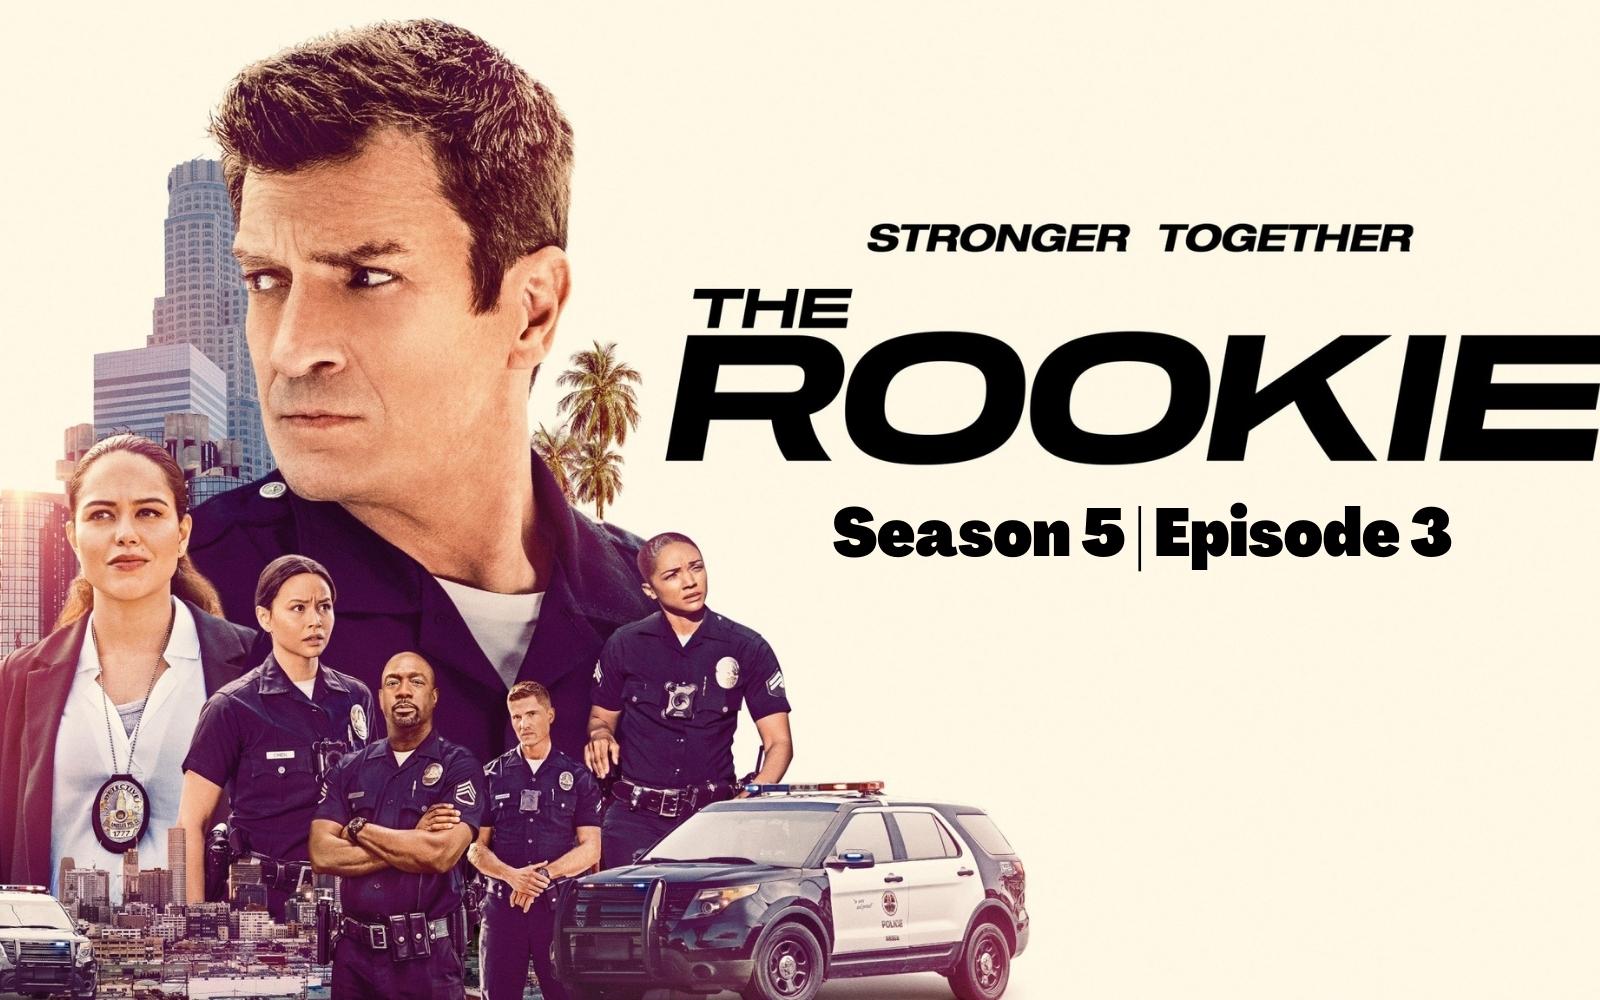 The Rookie Season 5 Episode 3 ⇒ Spoilers, Countdown, Speculation, Recap, Cast & News Updates